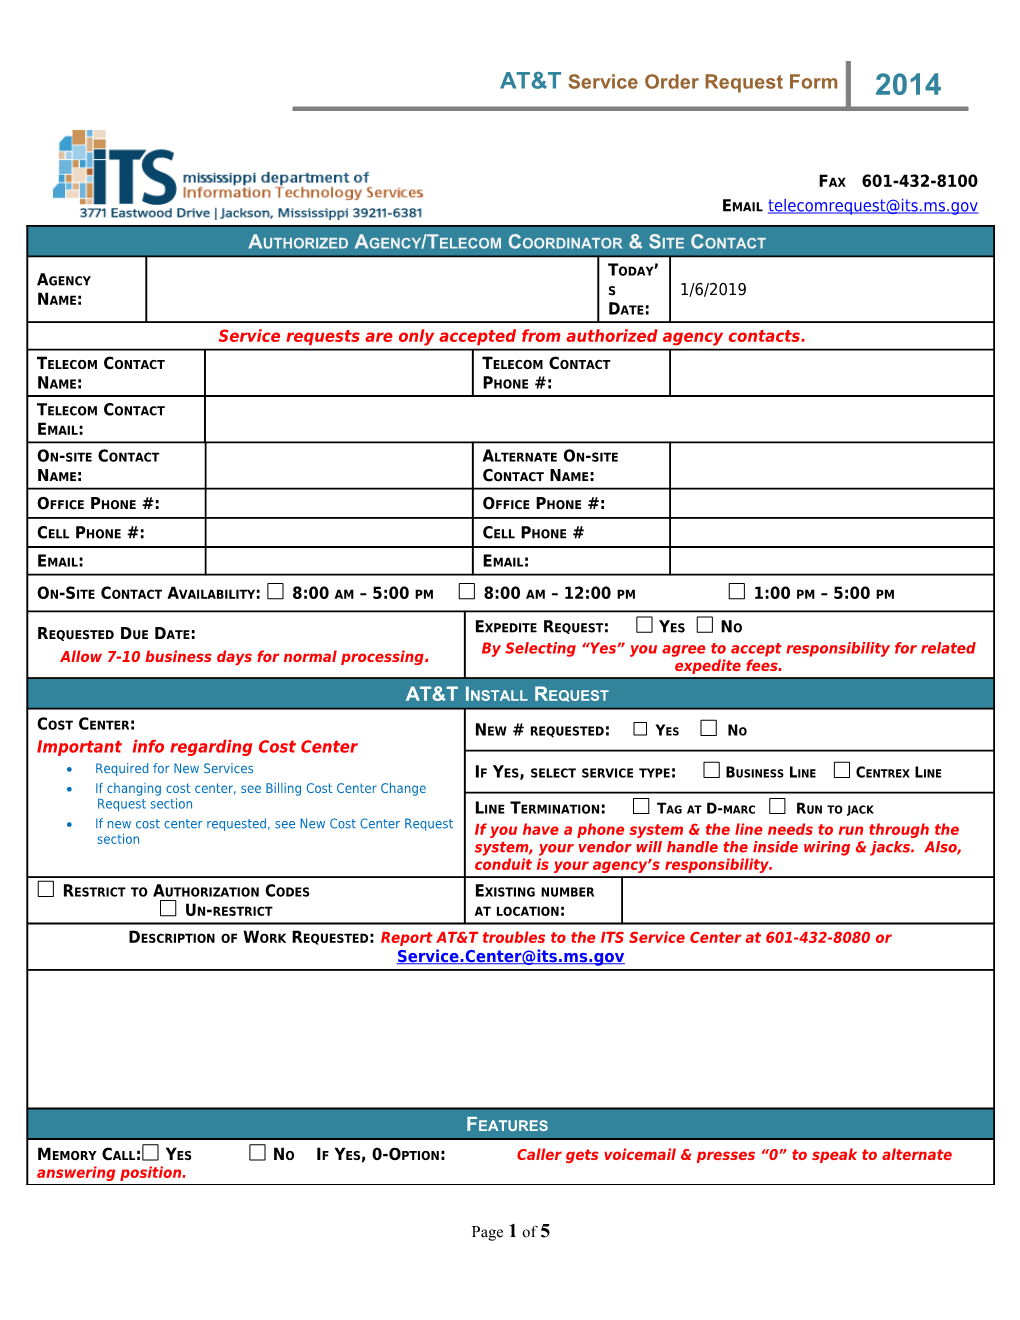 Telecom Services AT&T Service Order Request Form